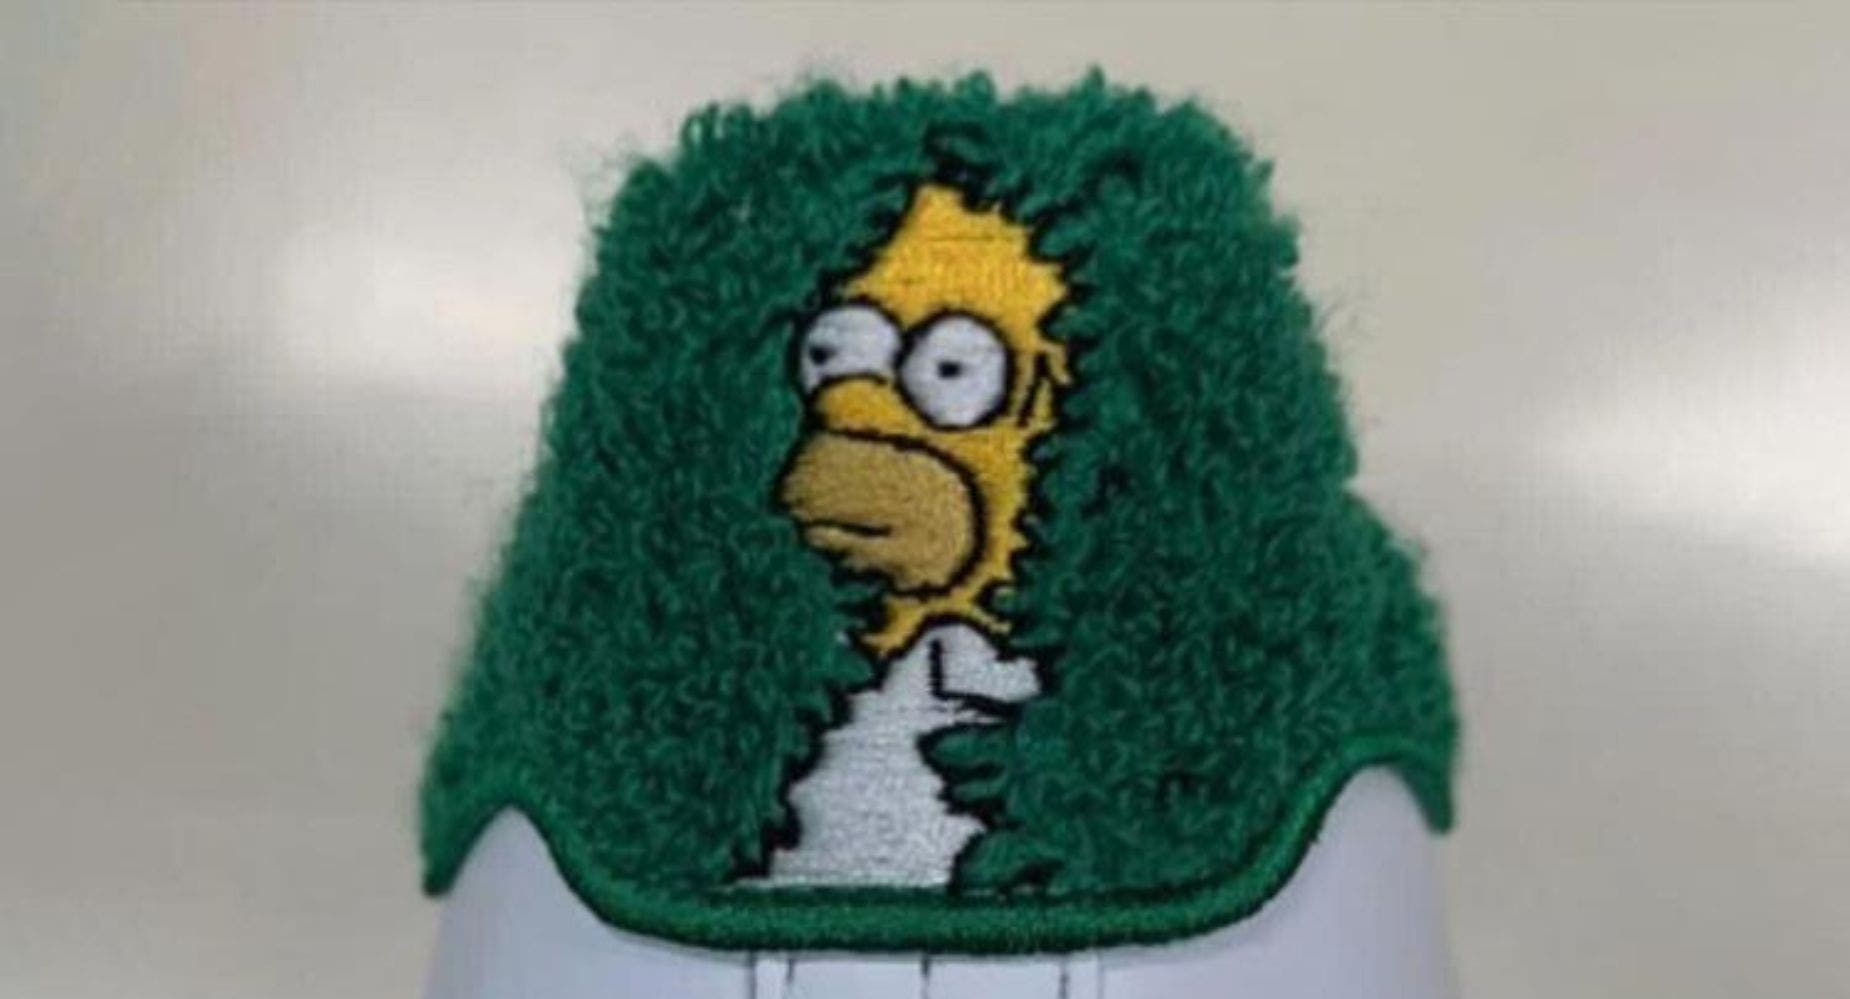 Adidas Channels Homer Simpson, Goes Back Into Hedges After Ending Kanye West Deal